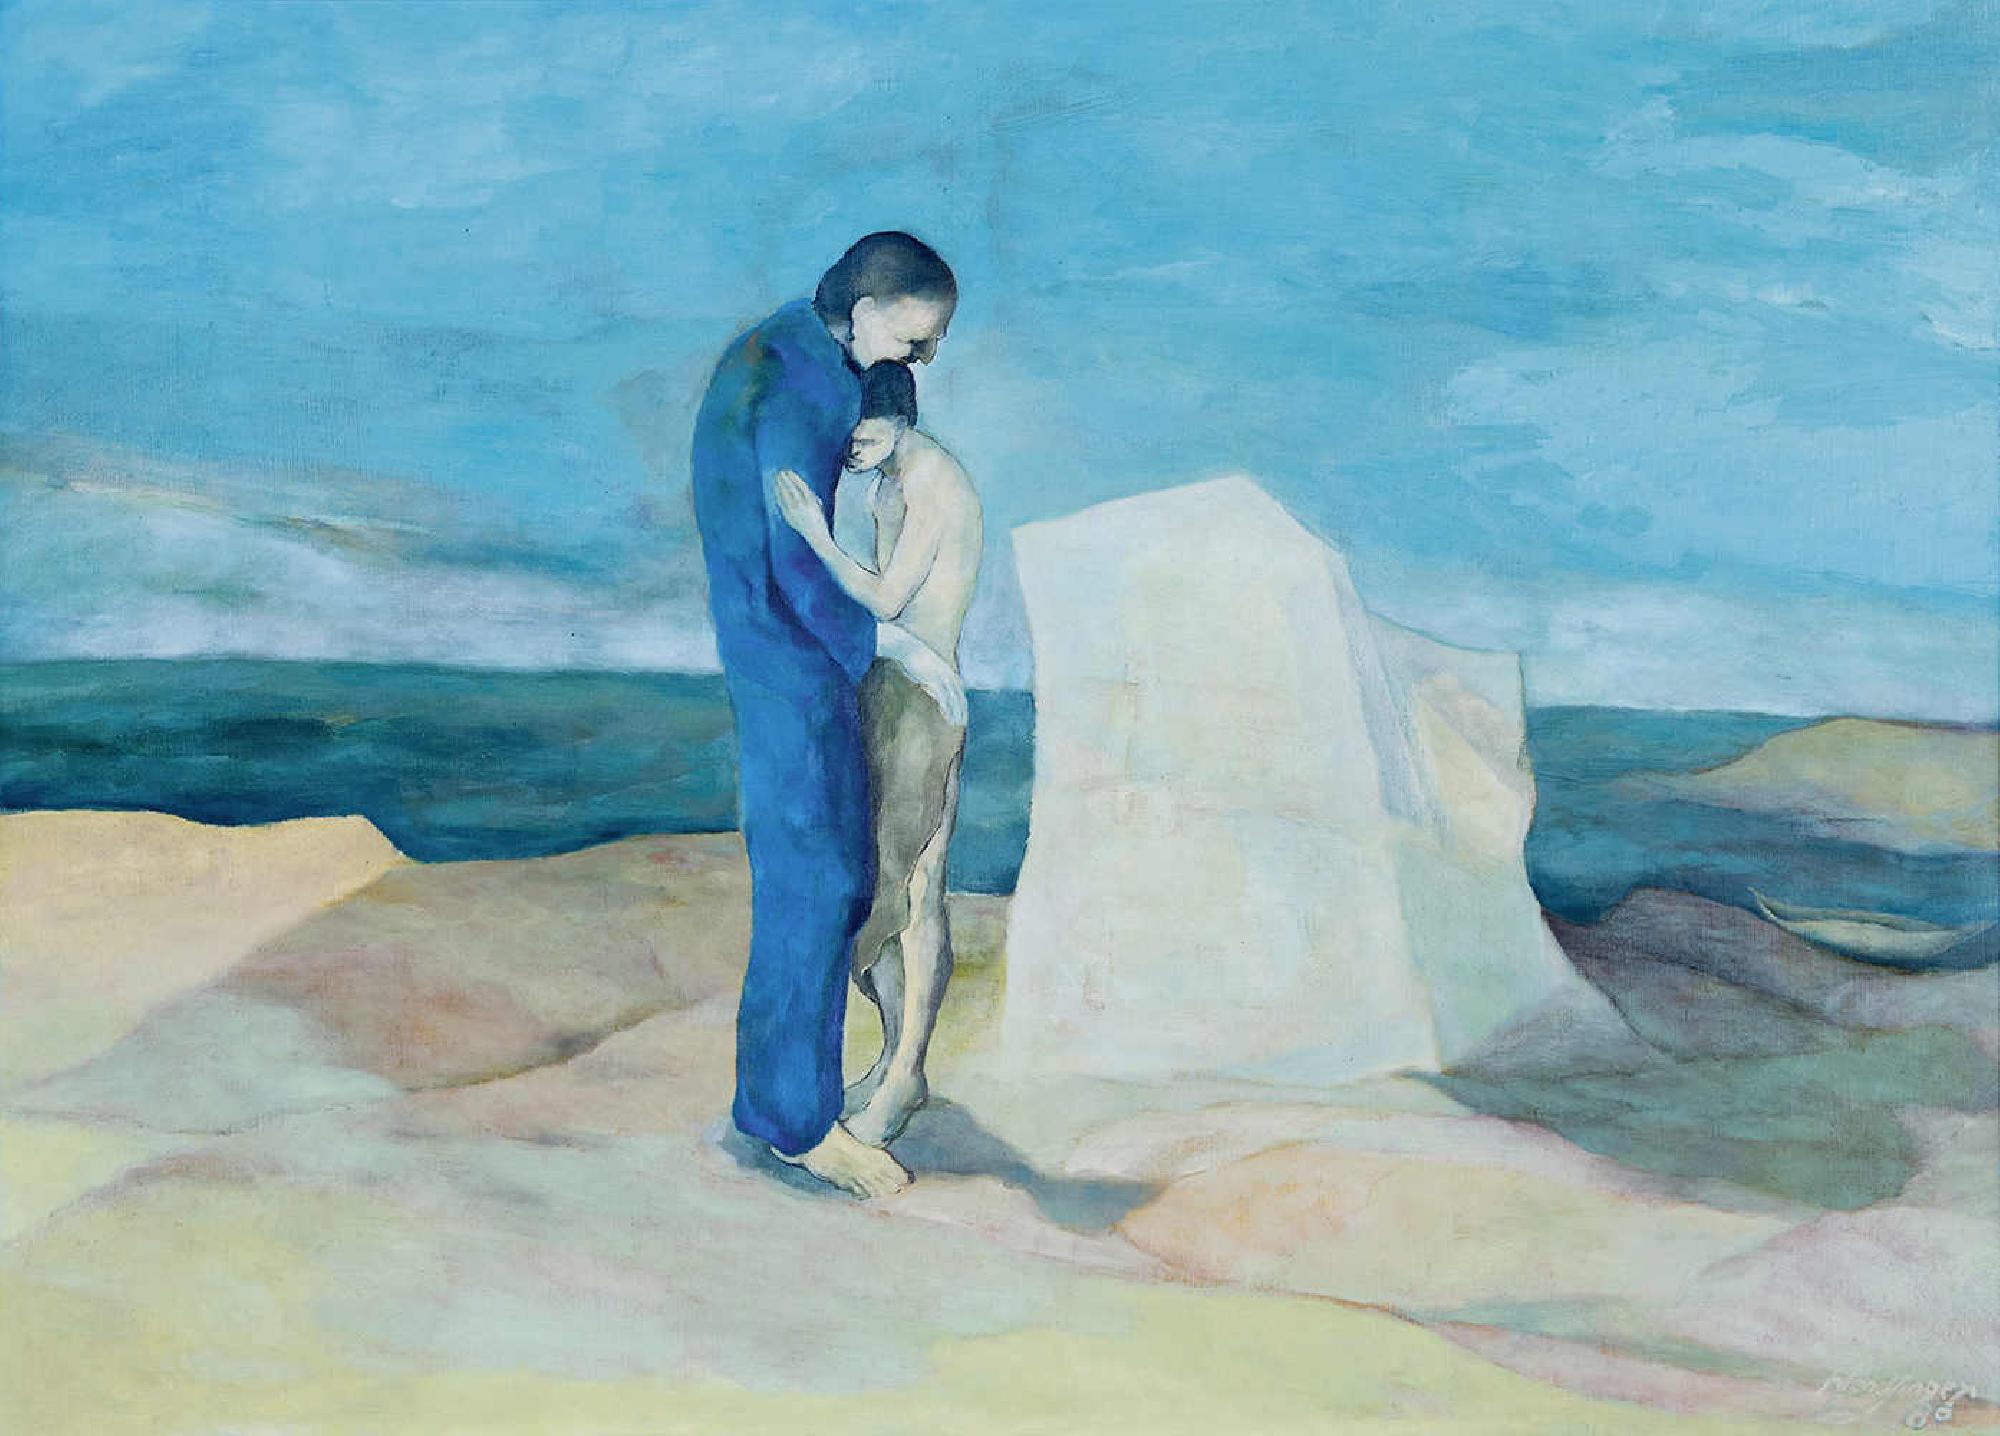 Leonard Lorenz: The lost son
1988
70 × 100 cm
Oil on canvas